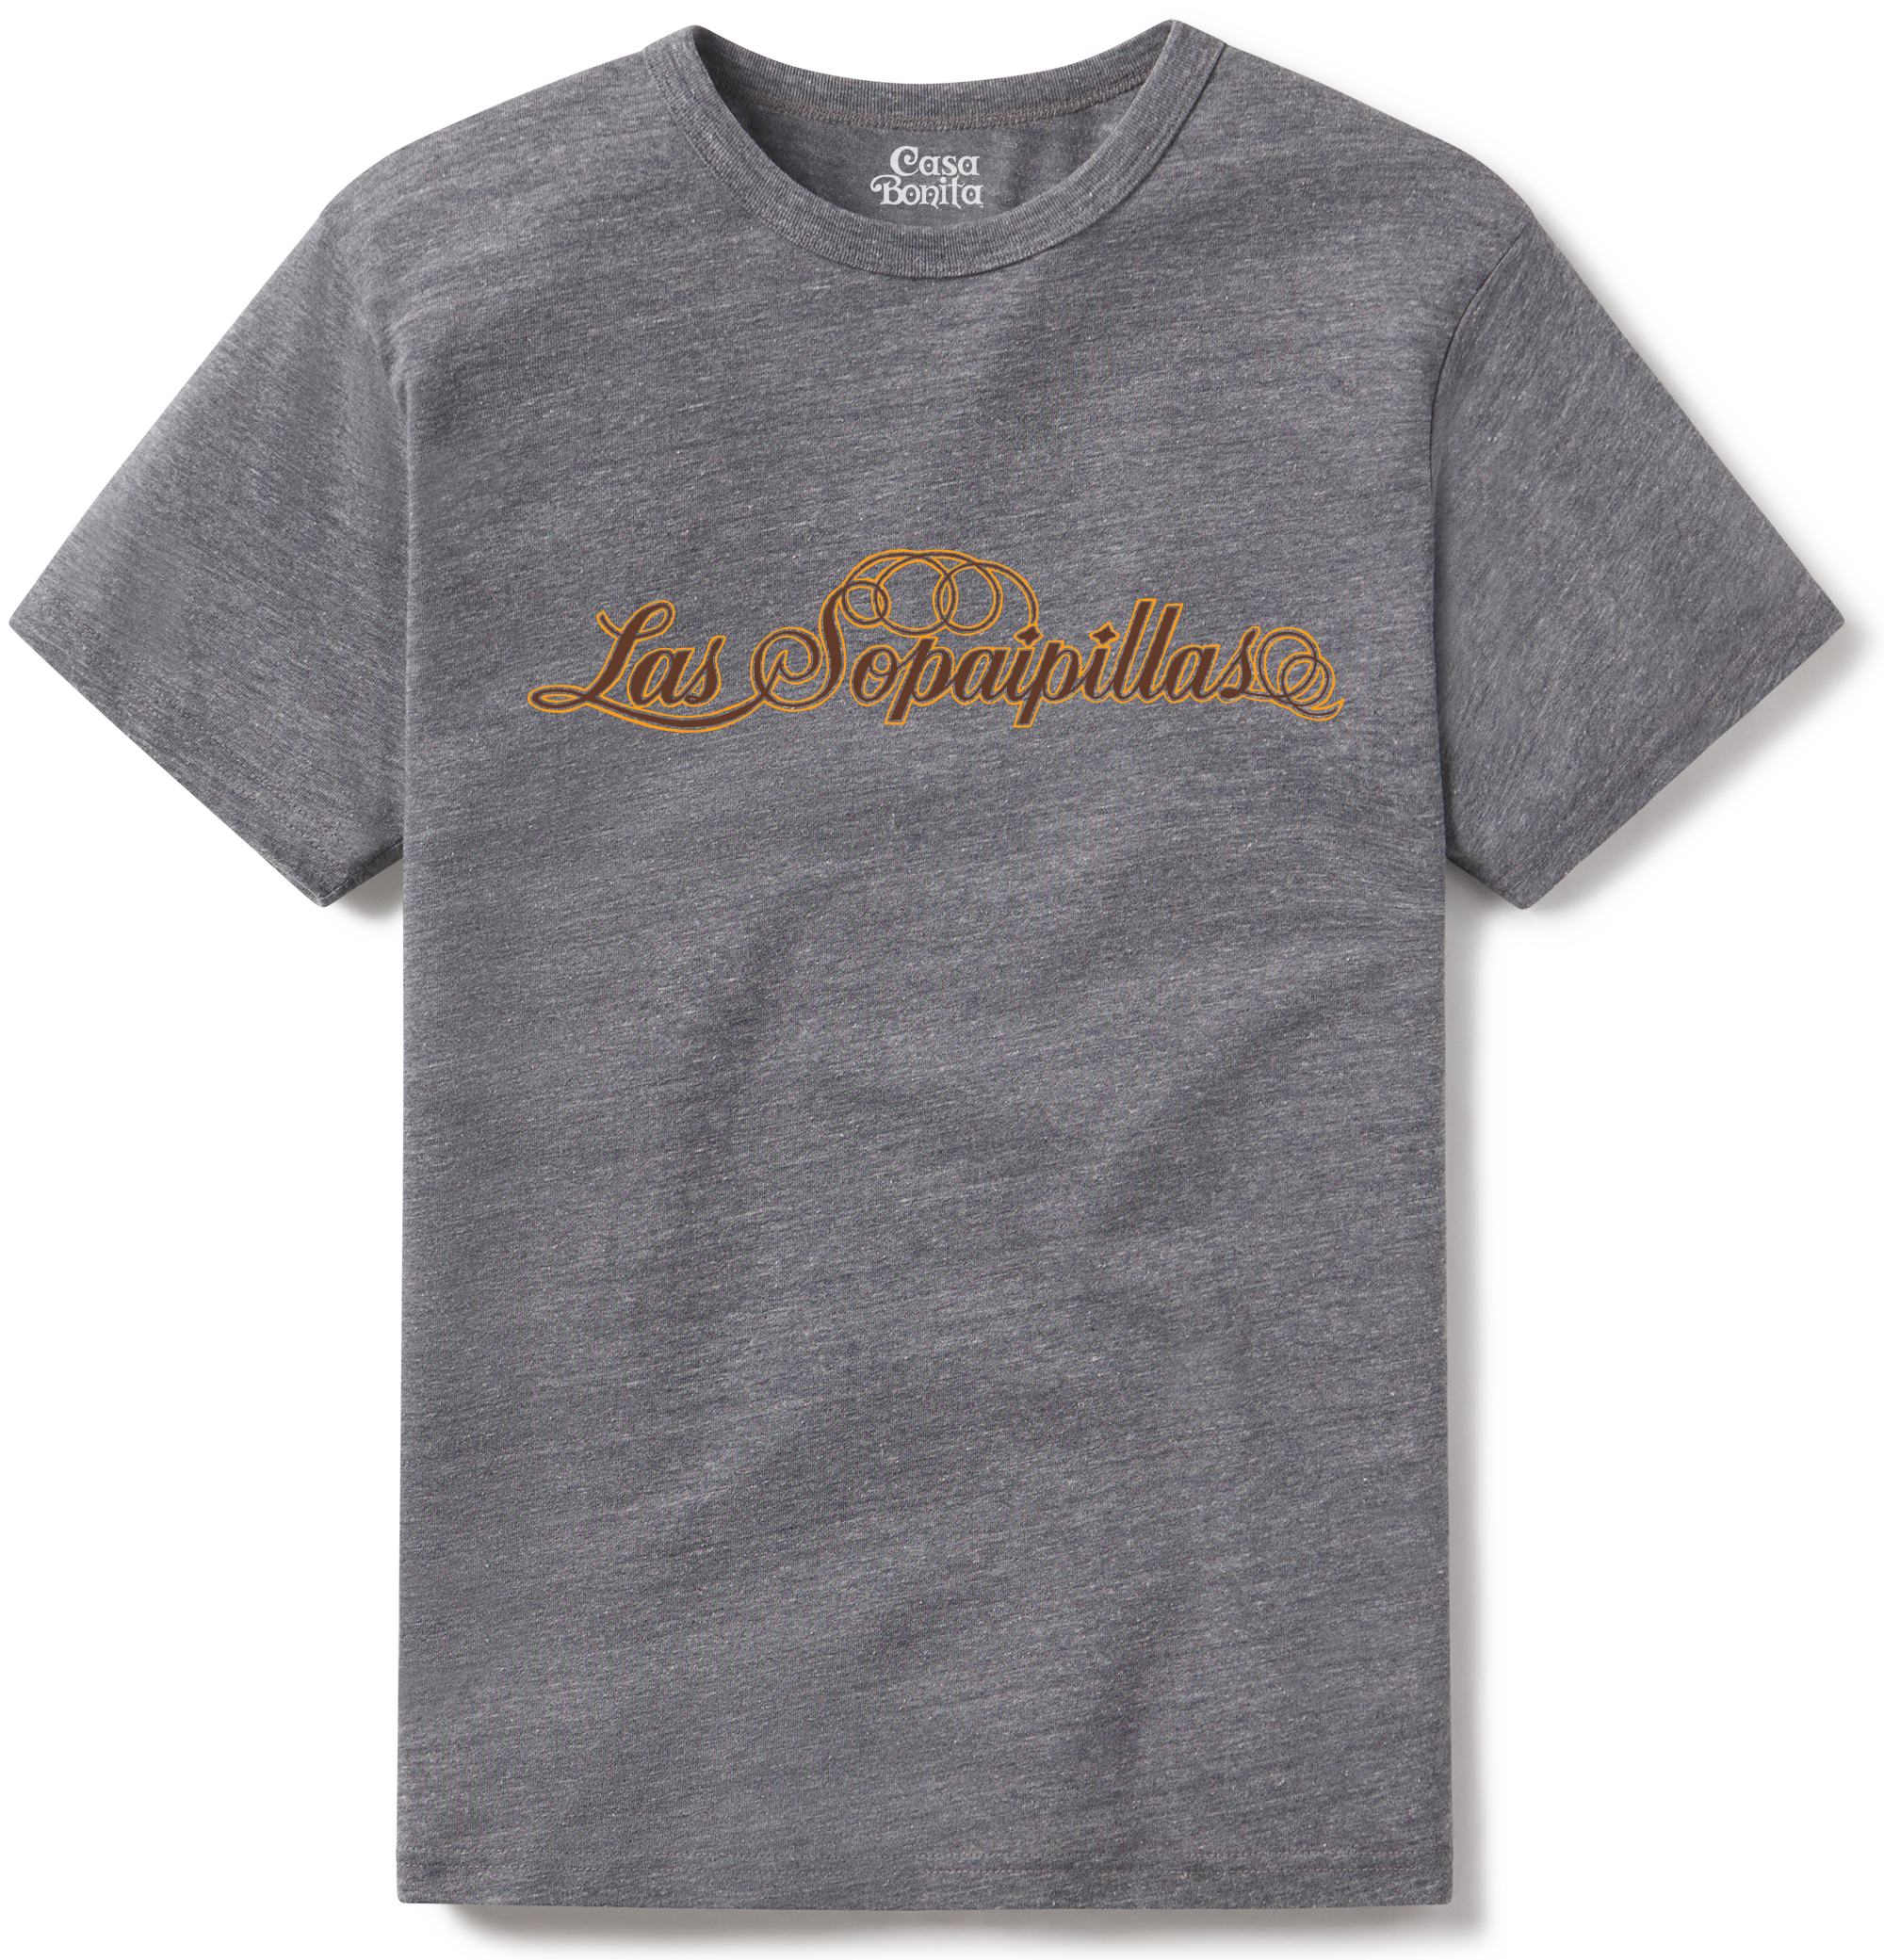 Casa Bonita Gray Las Sopaipillas T-Shirt